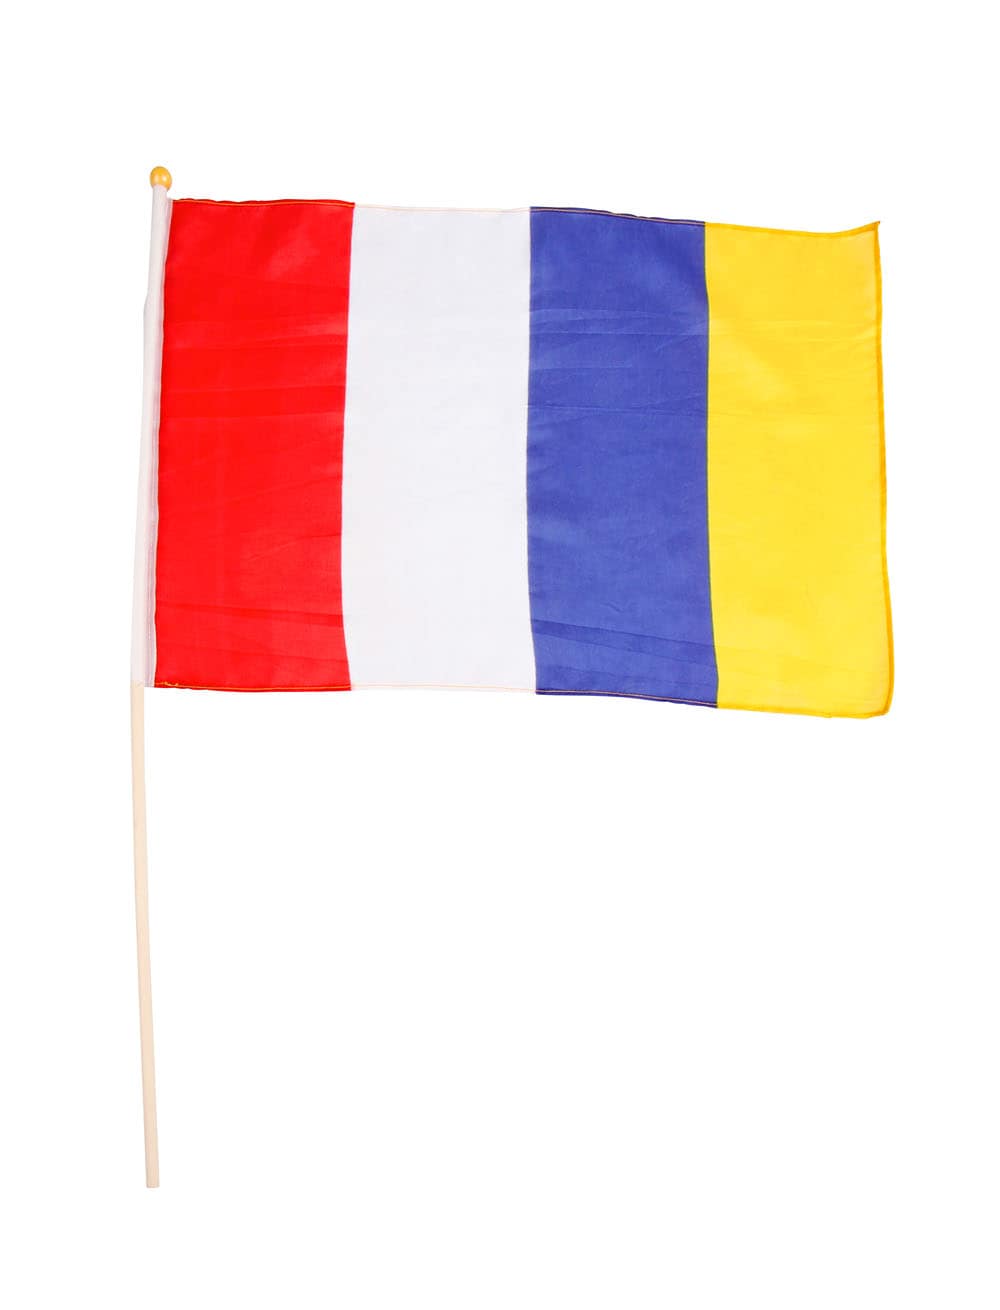 Flagge Mainz am Stab 45x30cm